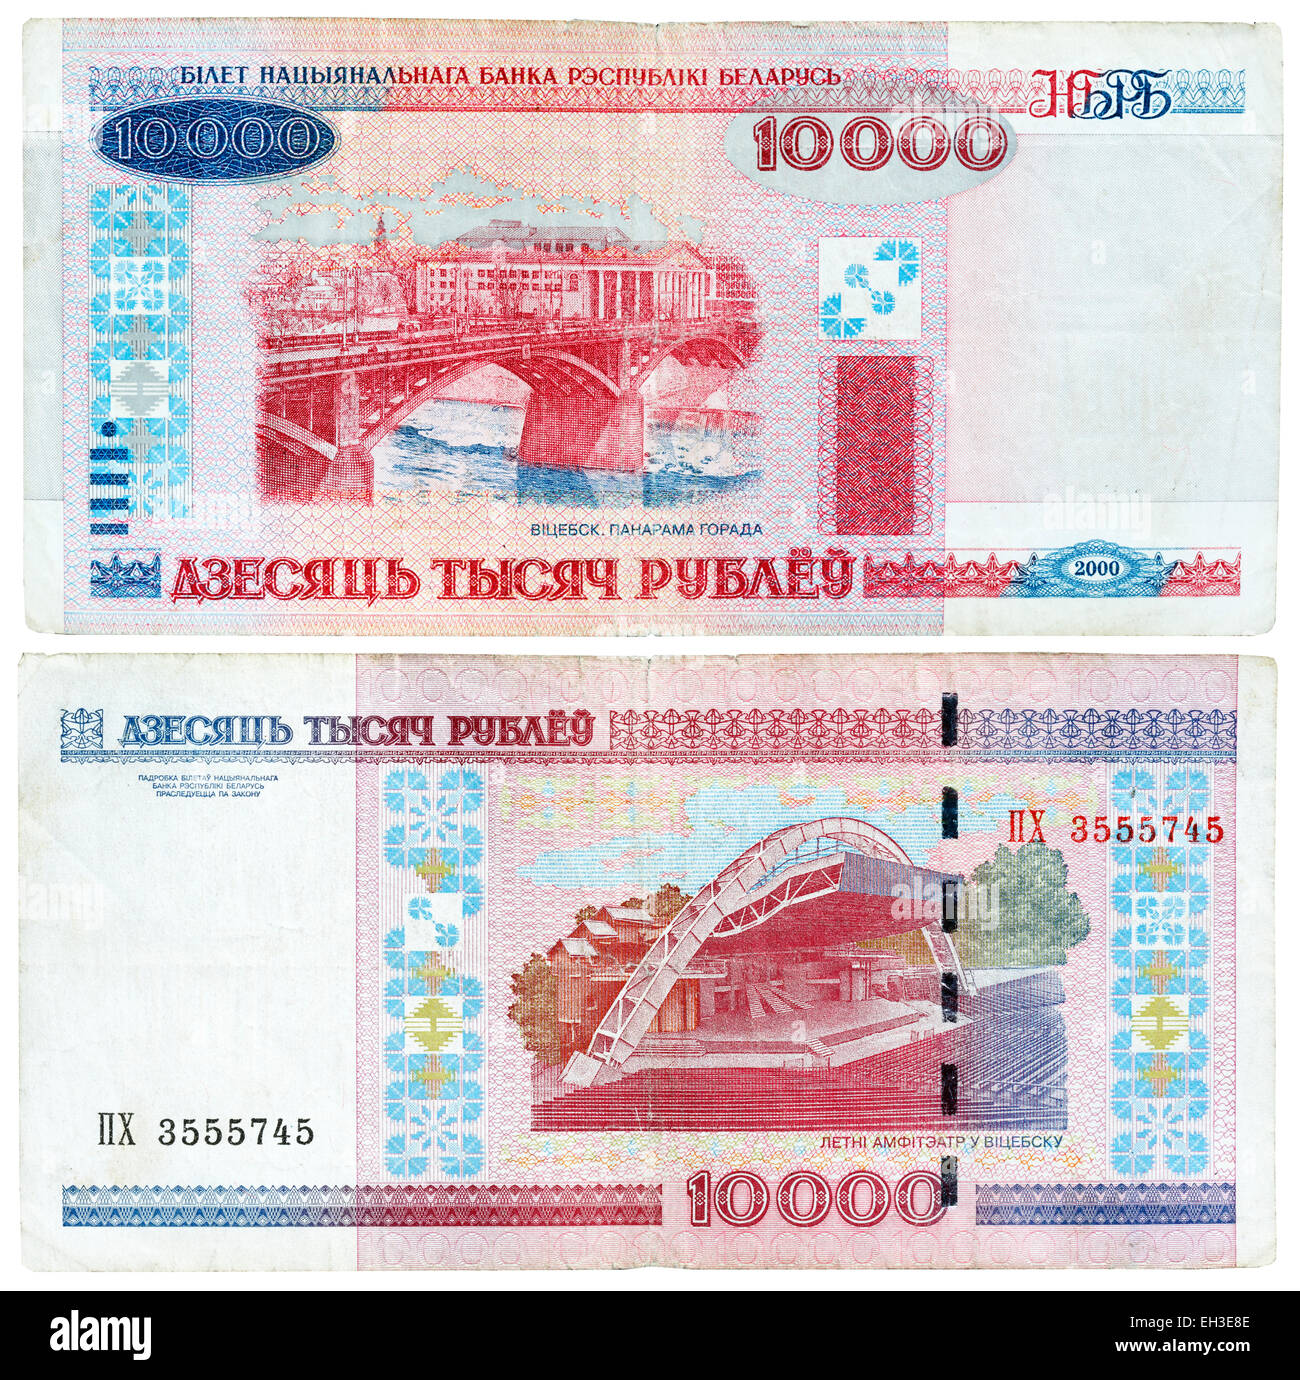 10000 roubles banknote, Vitebsk, Belarus, 2000 Stock Photo